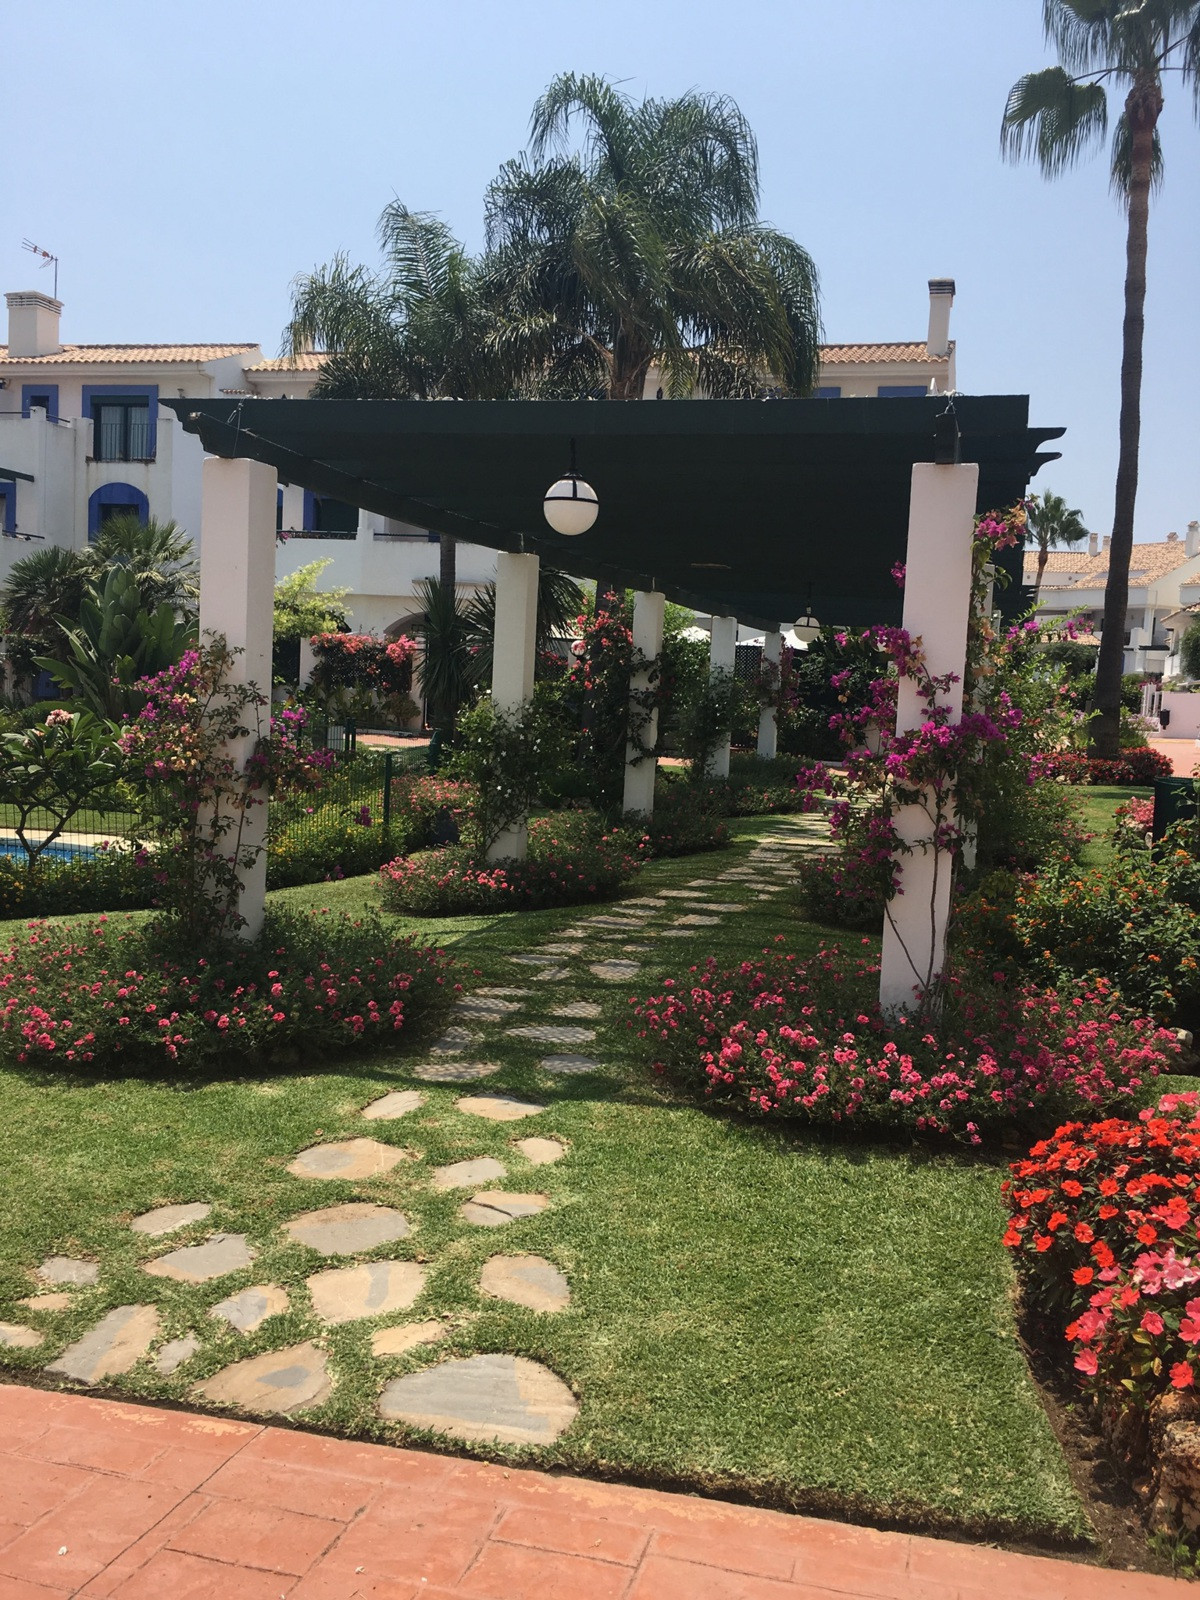 						Apartamento  Planta Baja
																					en alquiler
																			 en San Pedro de Alcántara
					